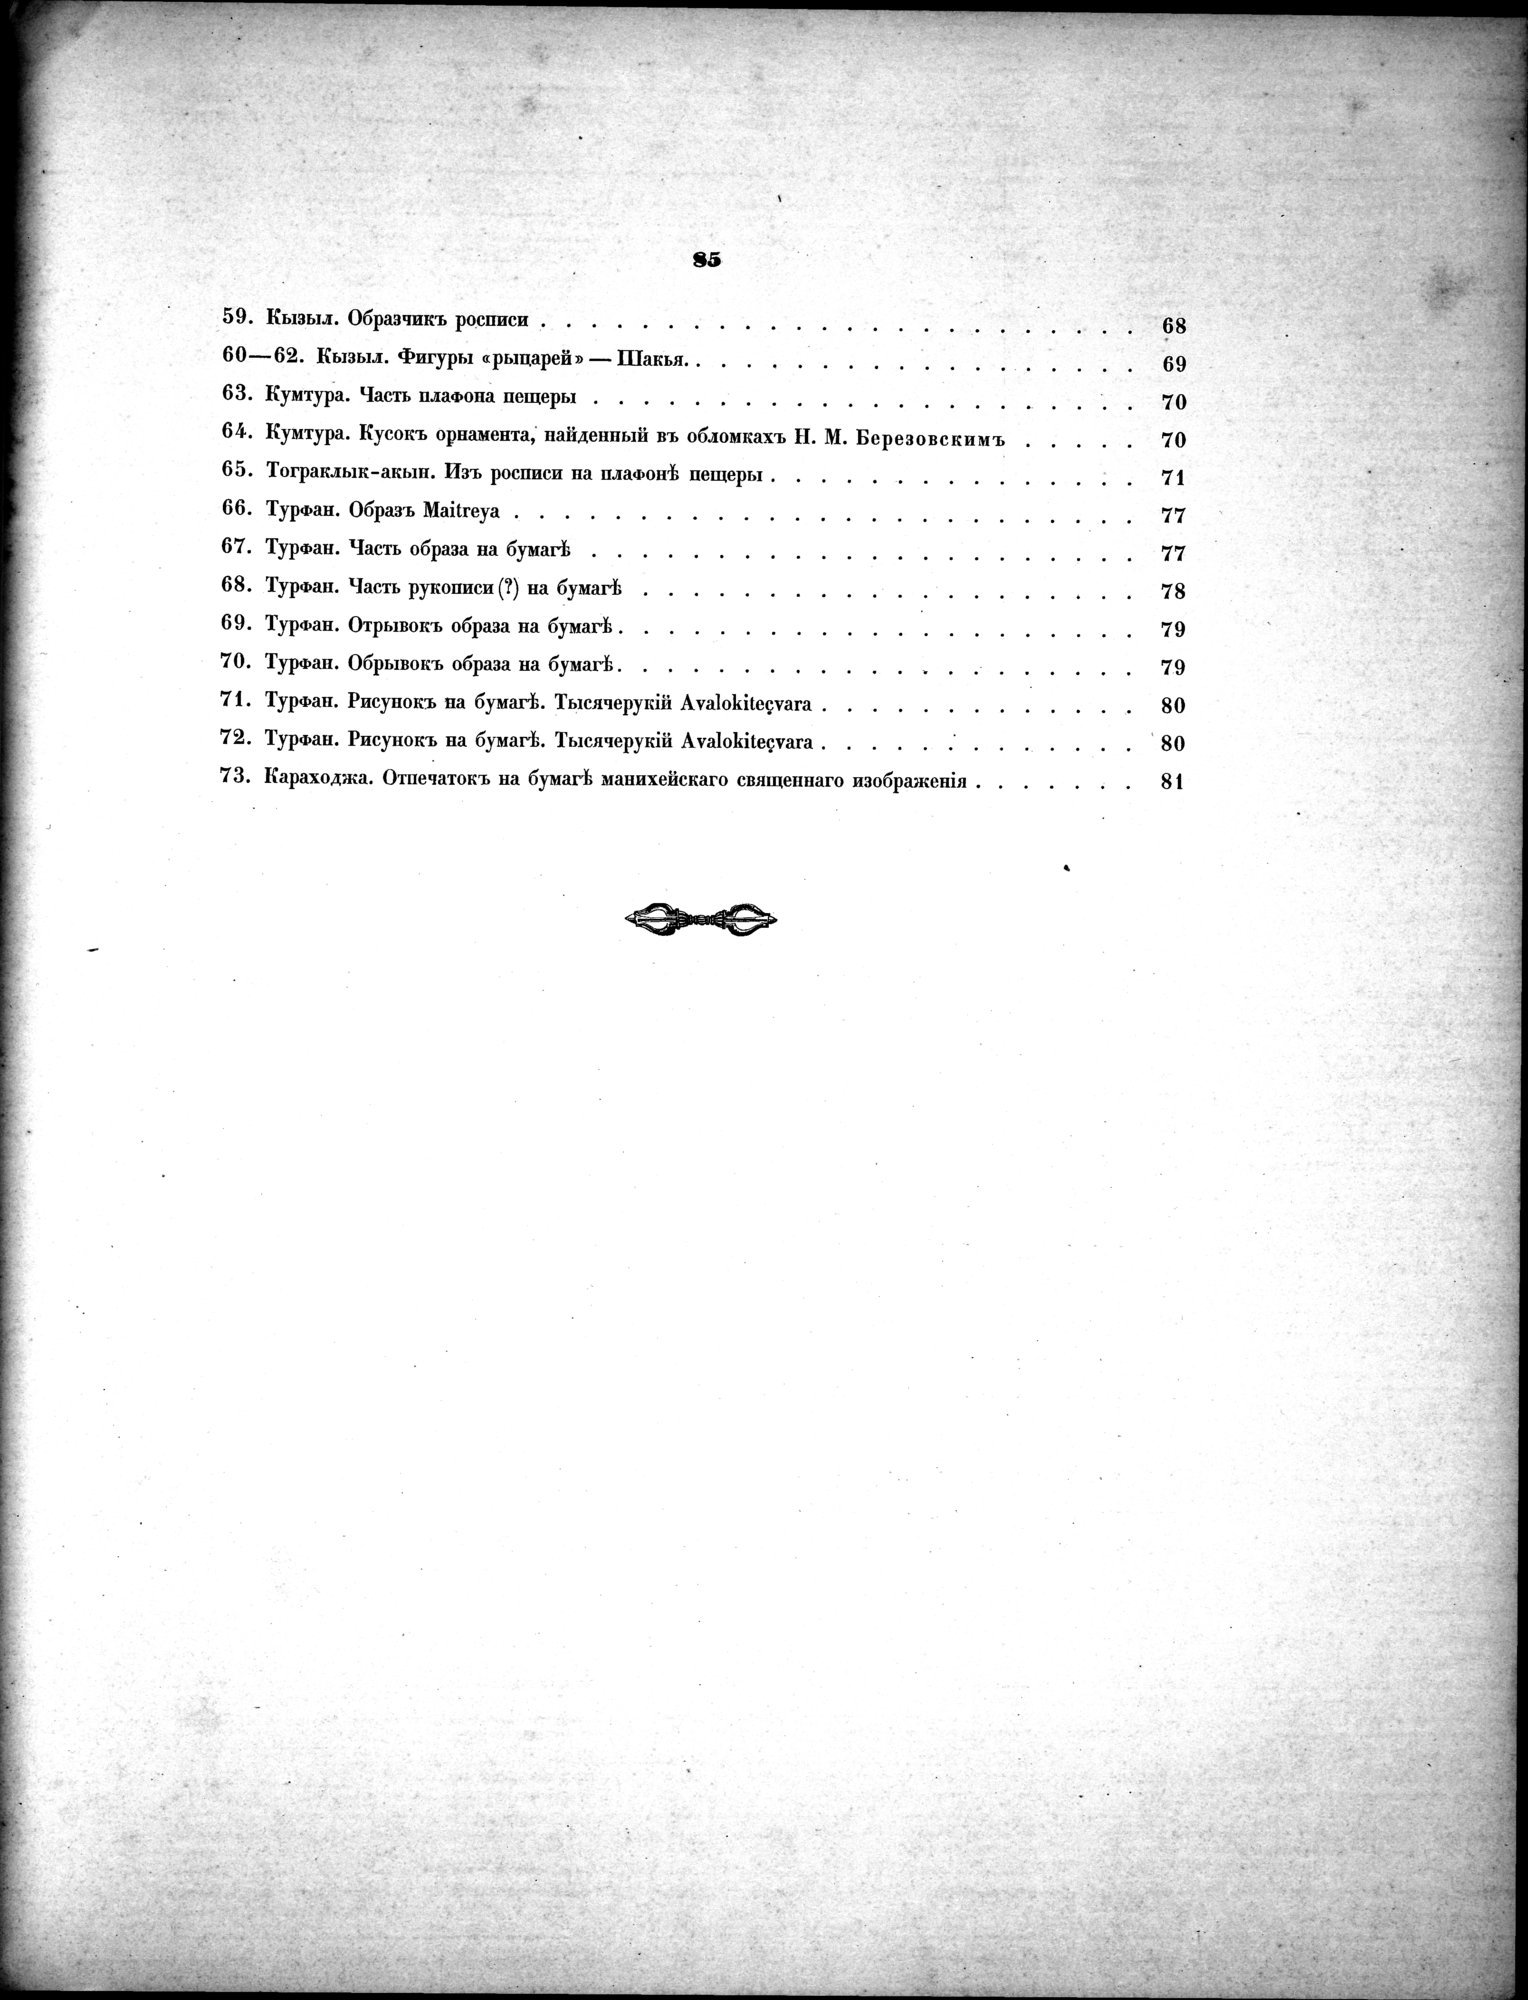 Russkaia Turkestanskaia Ekspeditsiia, 1909-1910 goda : vol.1 / Page 99 (Grayscale High Resolution Image)